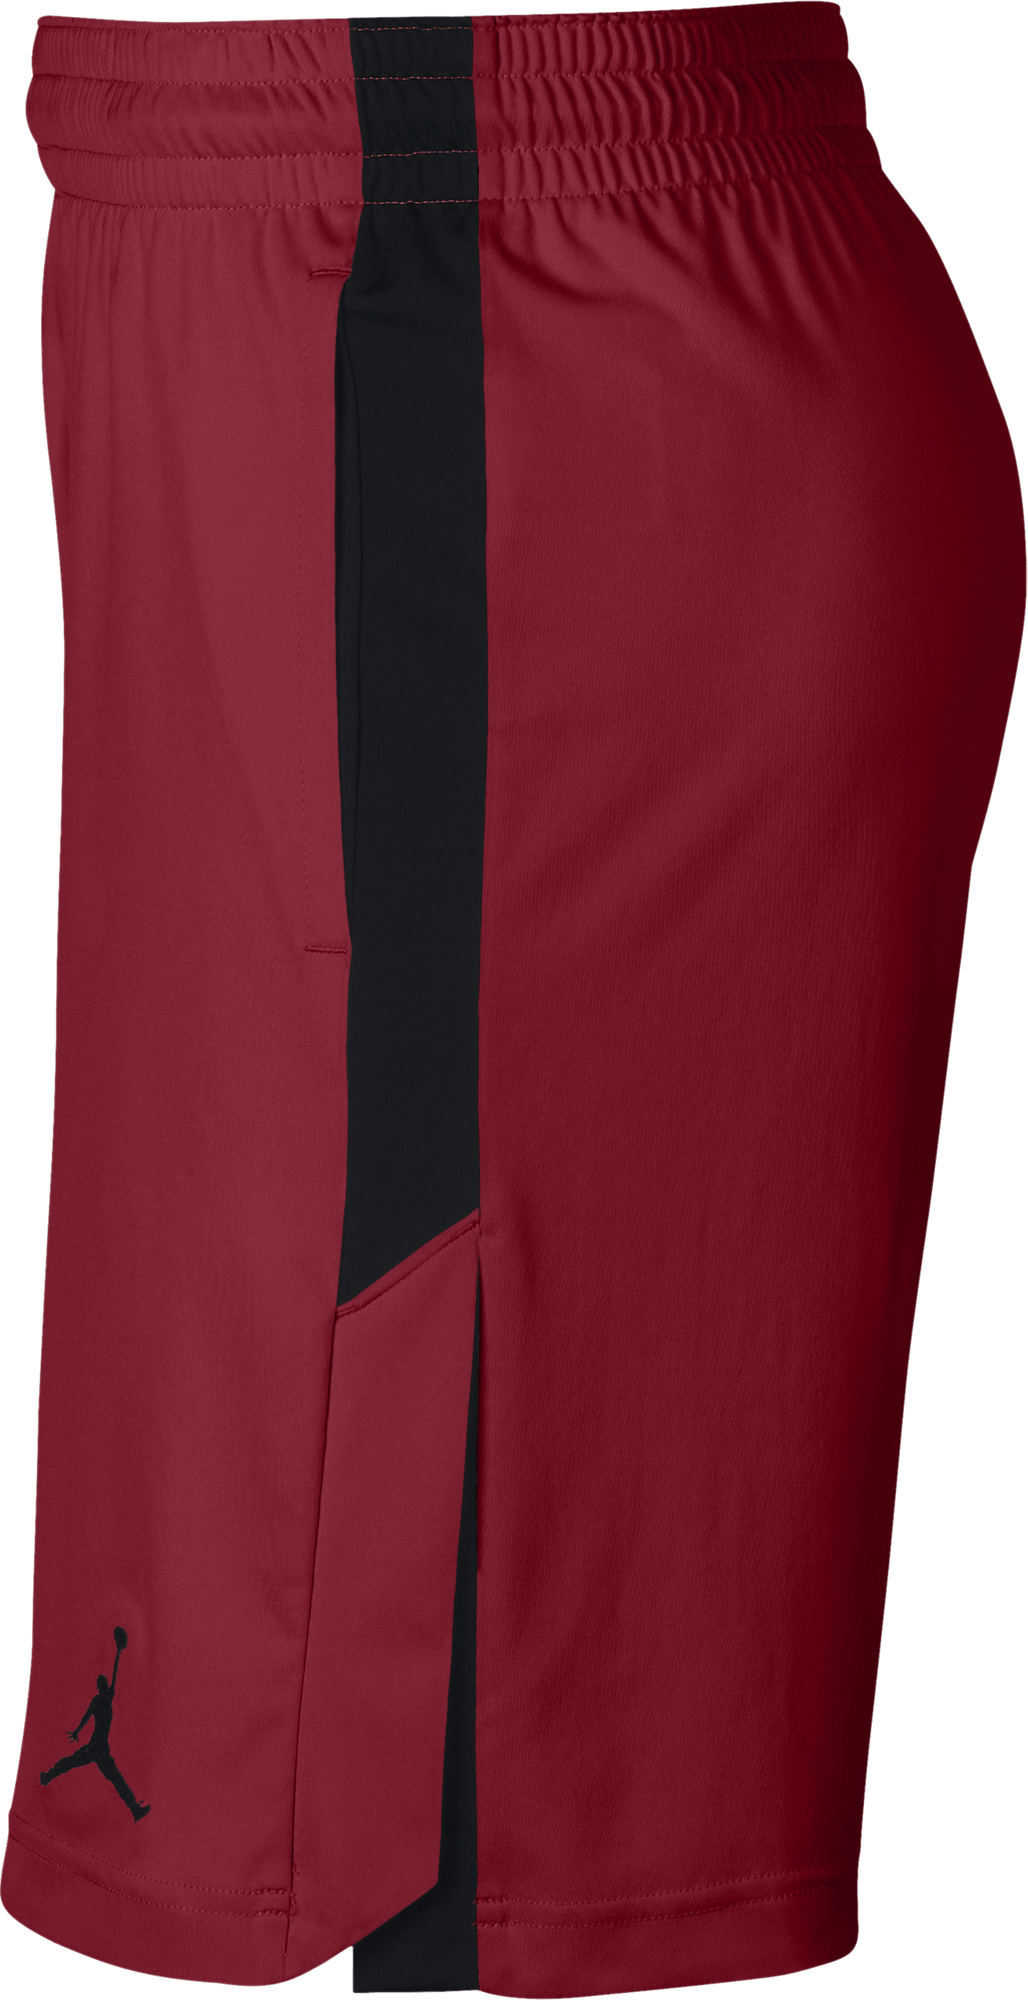 Dry Knit Short Gym Red/Black/Black